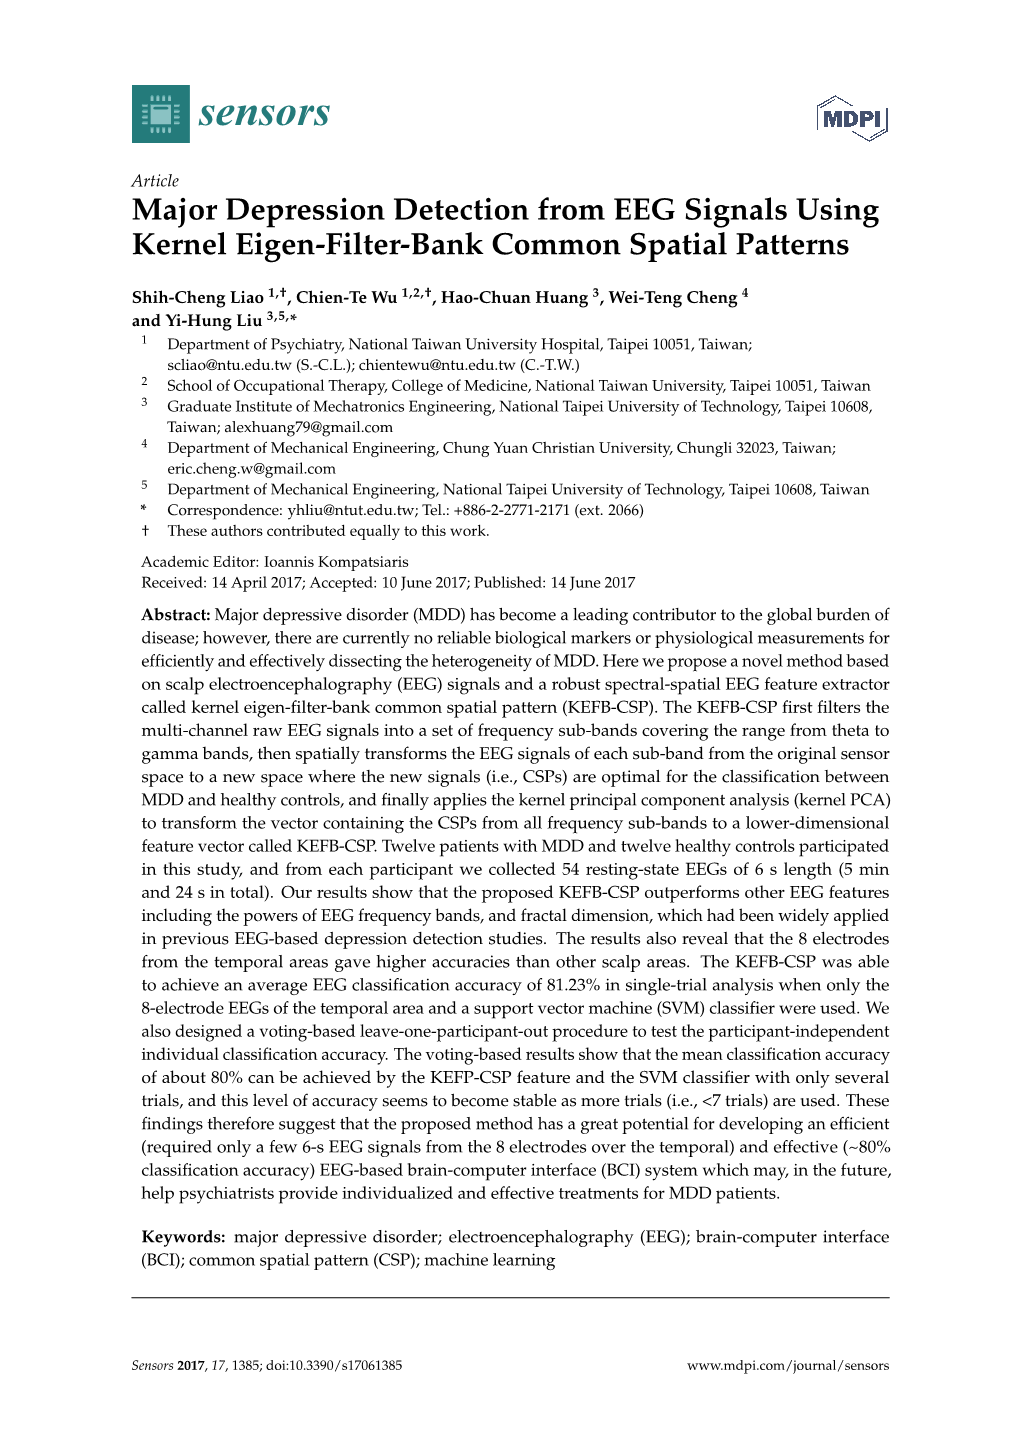 Major Depression Detection from EEG Signals Using Kernel Eigen-Filter-Bank Common Spatial Patterns